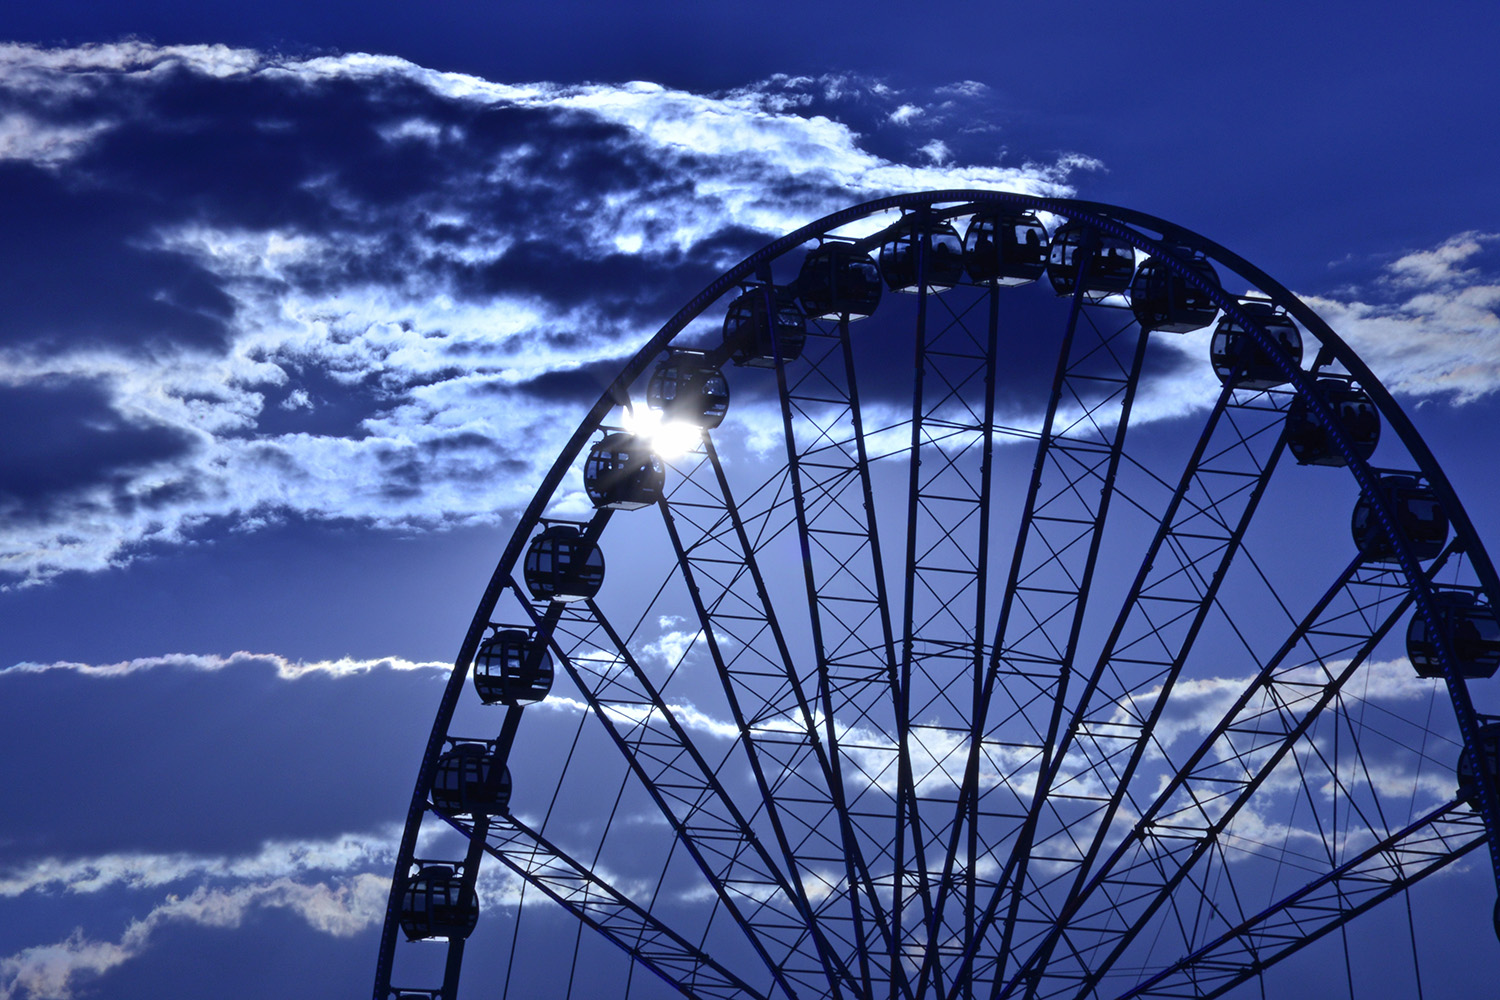 Ferris_Wheel,_National_Harbor_Sun_Clouds_Maryland.jpg